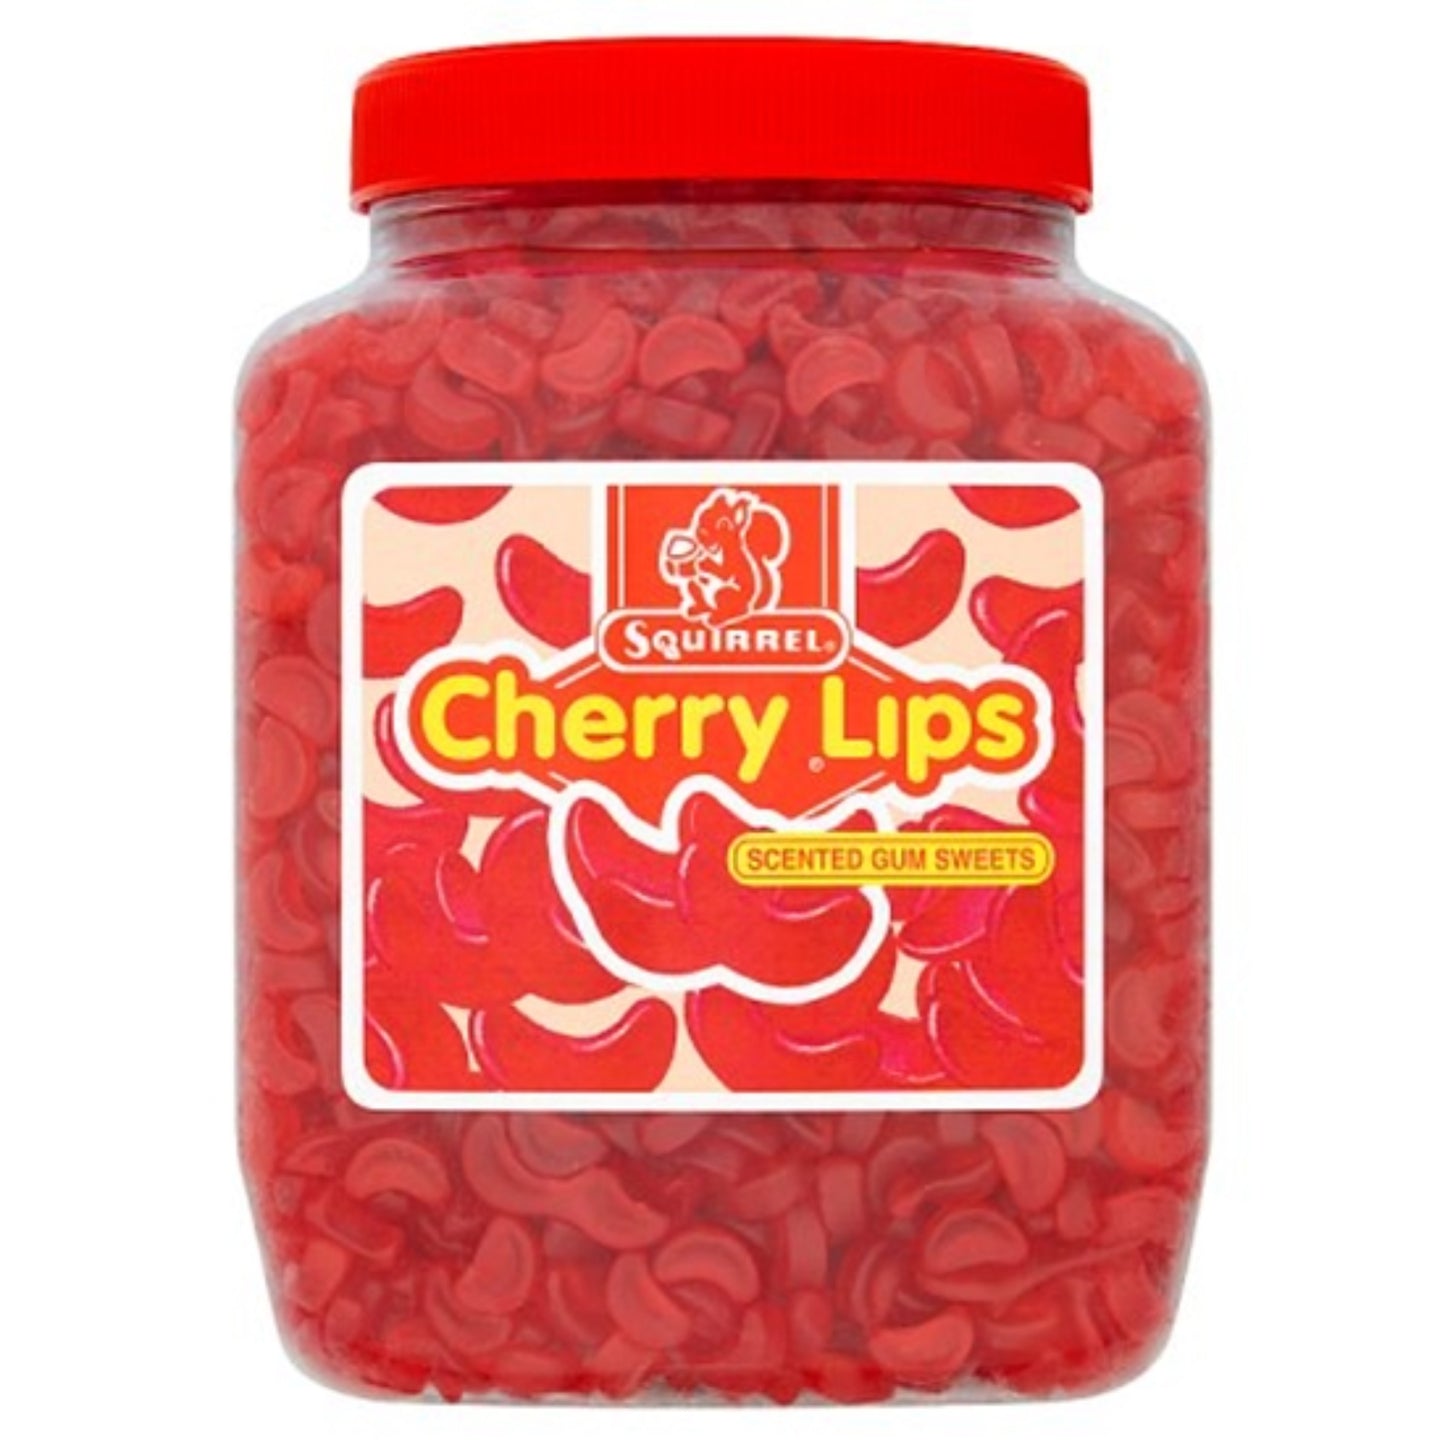 Cherry Lips - 2.25kg